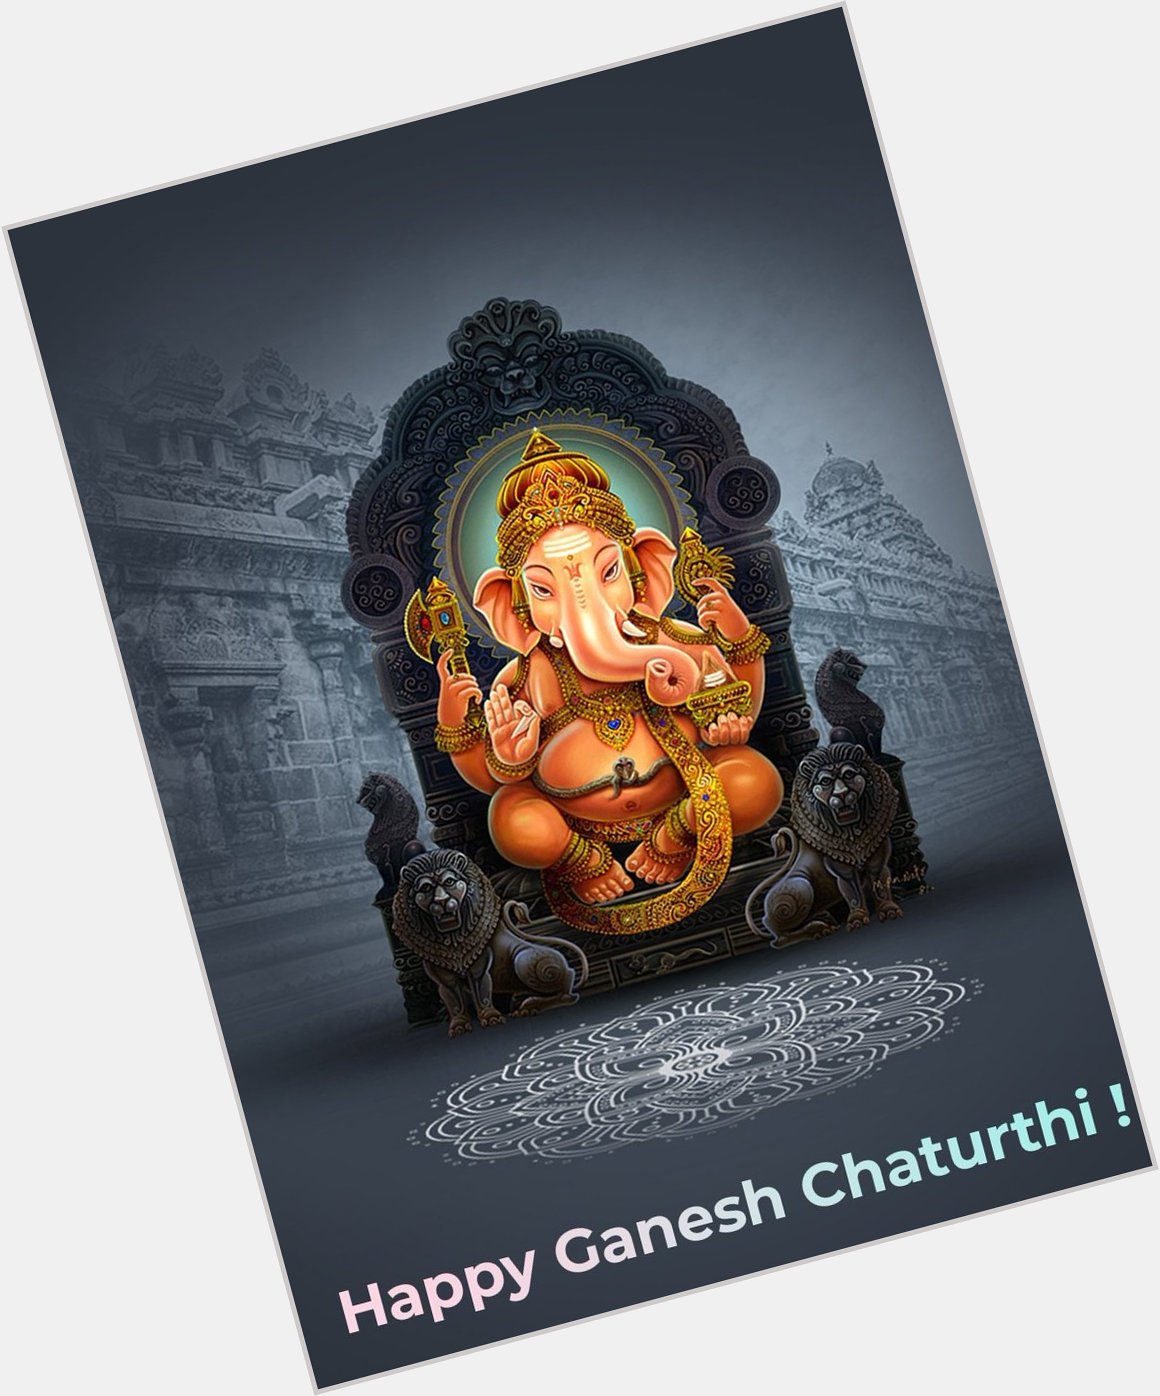  Happy birthday and happy Ganesh chaturthi ,To you Javagal srinath,sir 